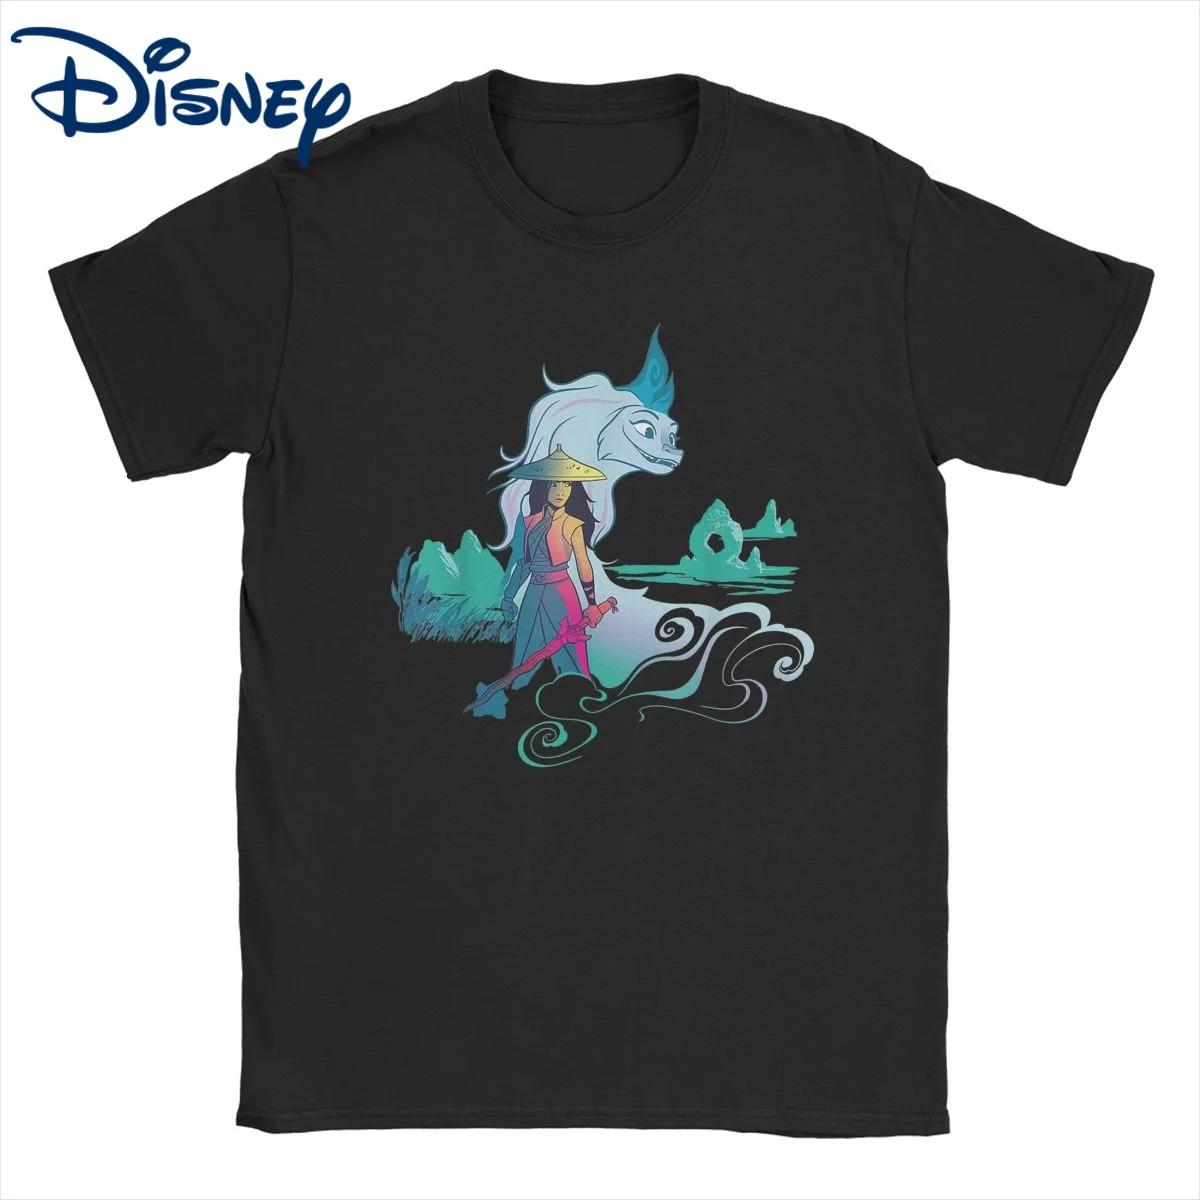 

Leisure Disney Raya And The Last Dragon T-Shirts Men Women Crewneck Pure Cotton T Shirt Cartoon Short Sleeve Tees Gift Idea Tops